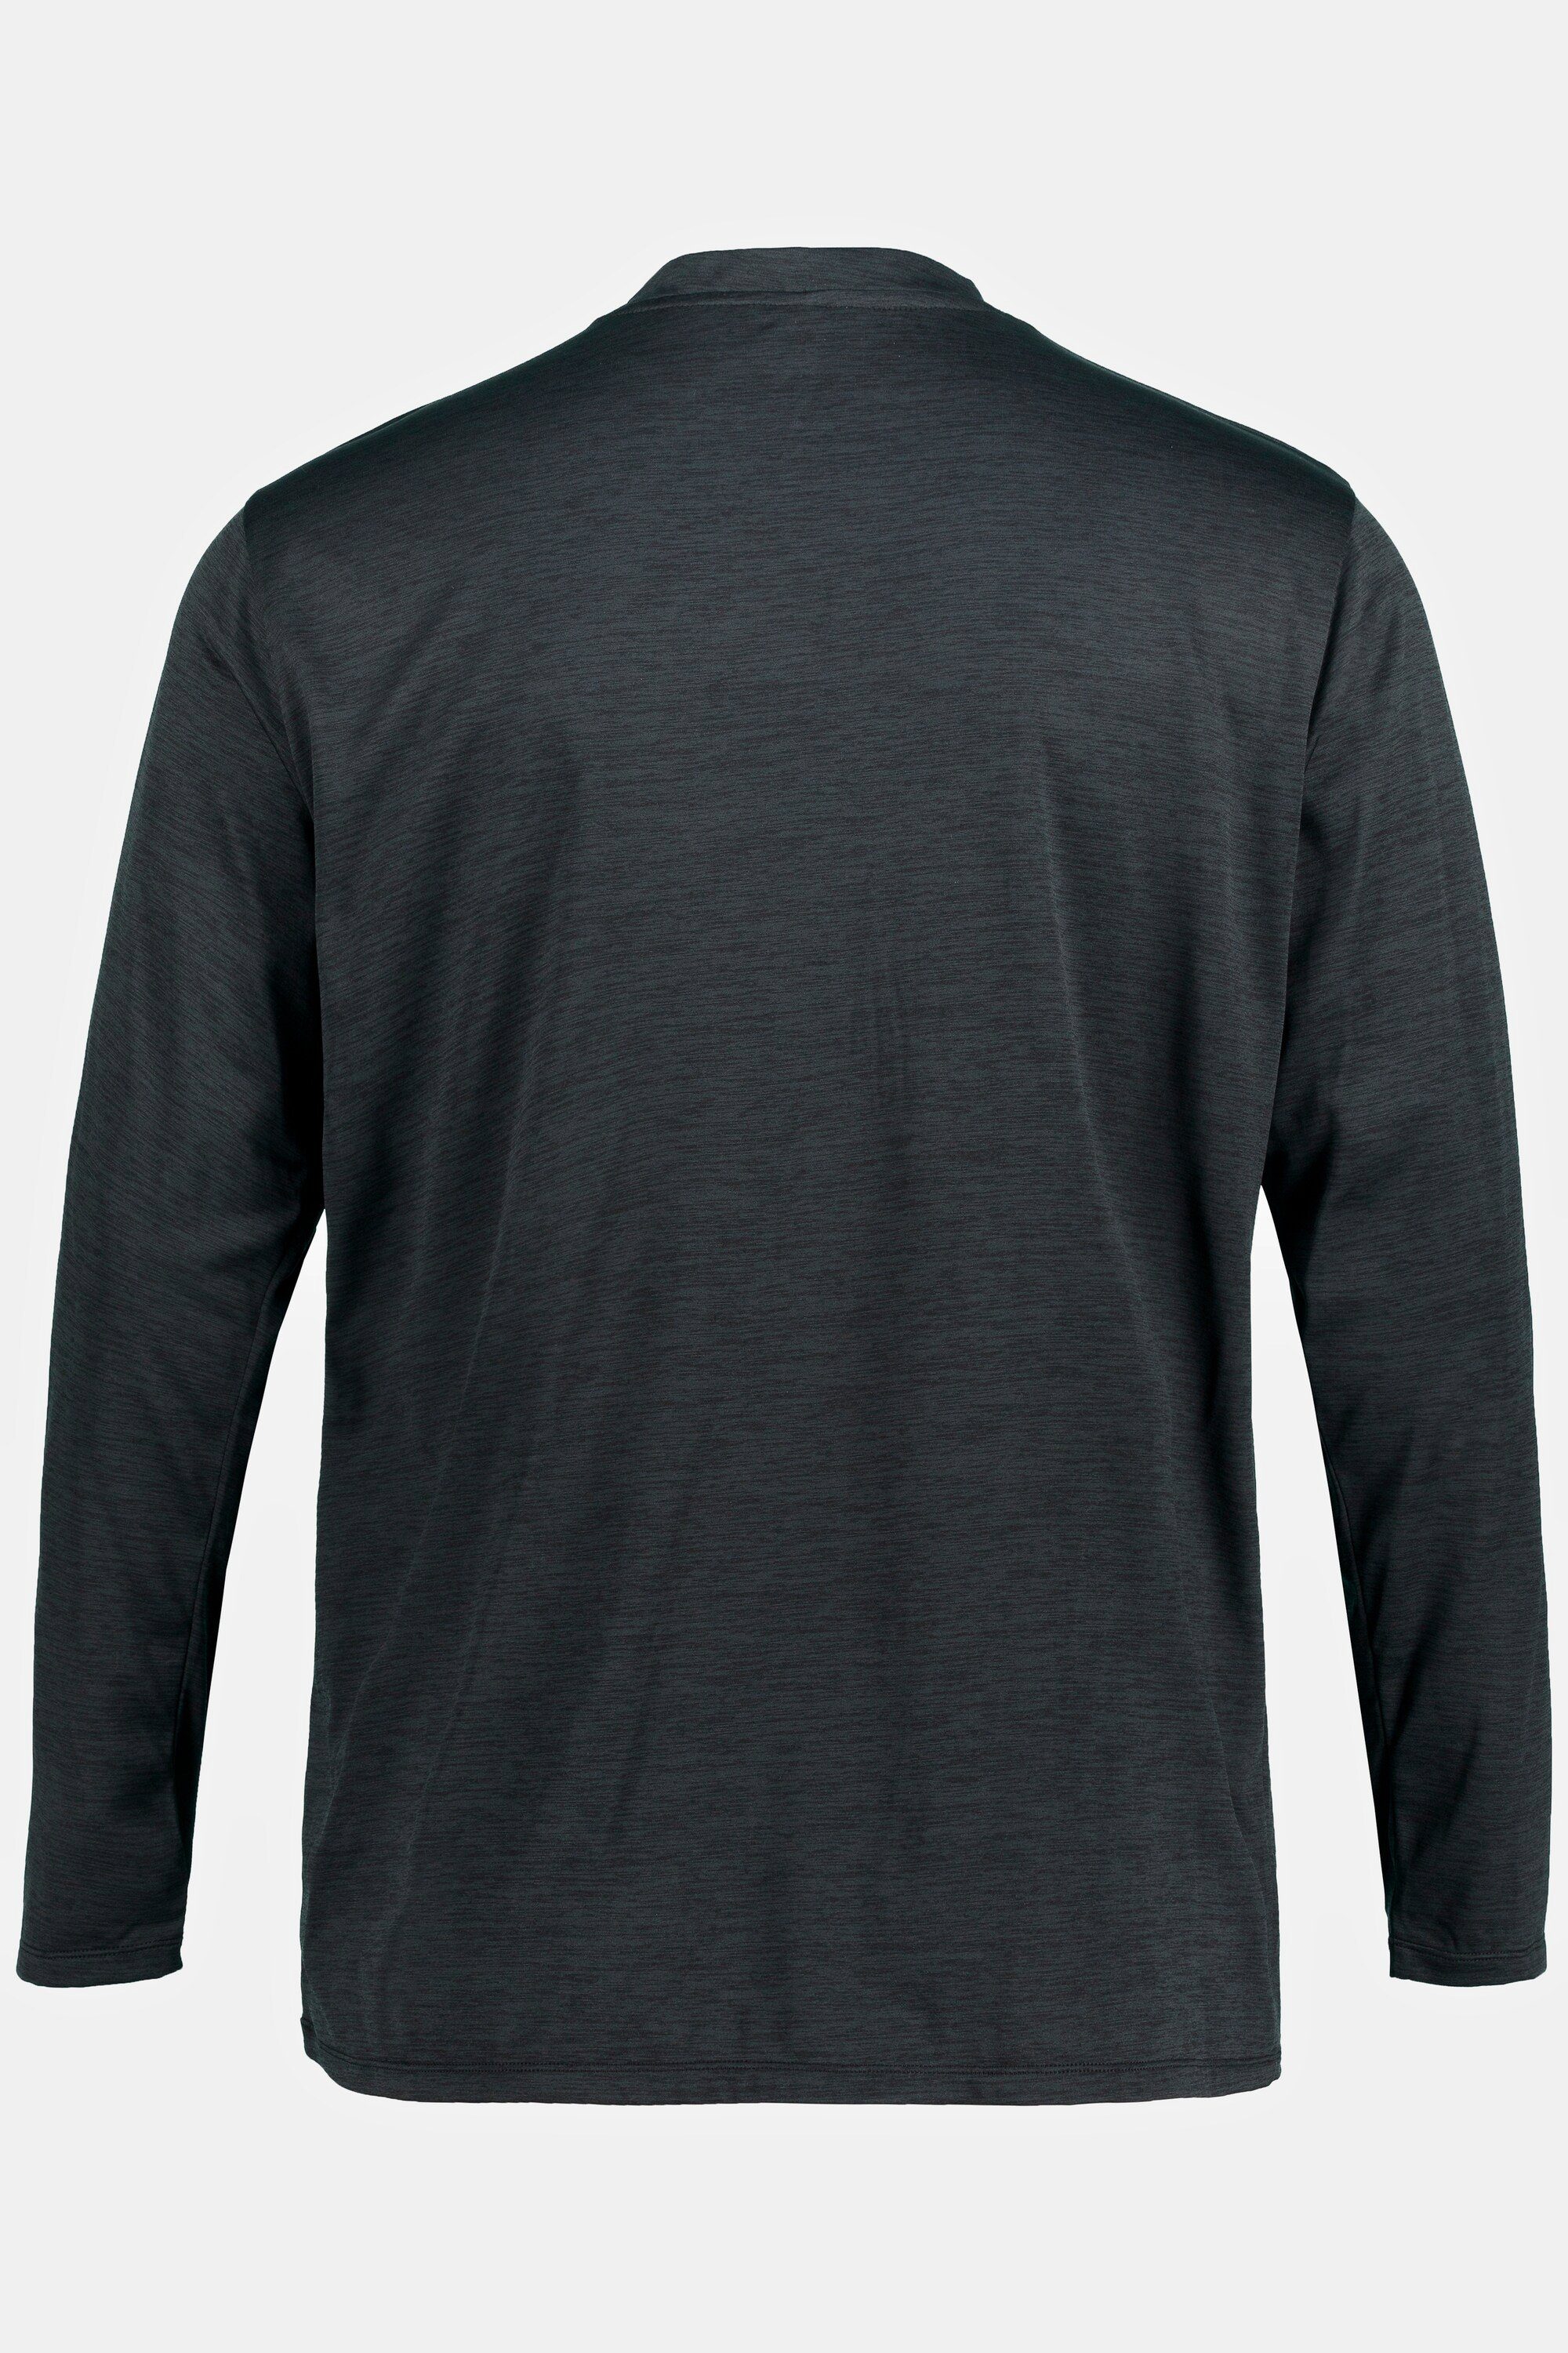 JP1880 Unterhemd atmungsaktiv Langarm Funktions-Unterhemd